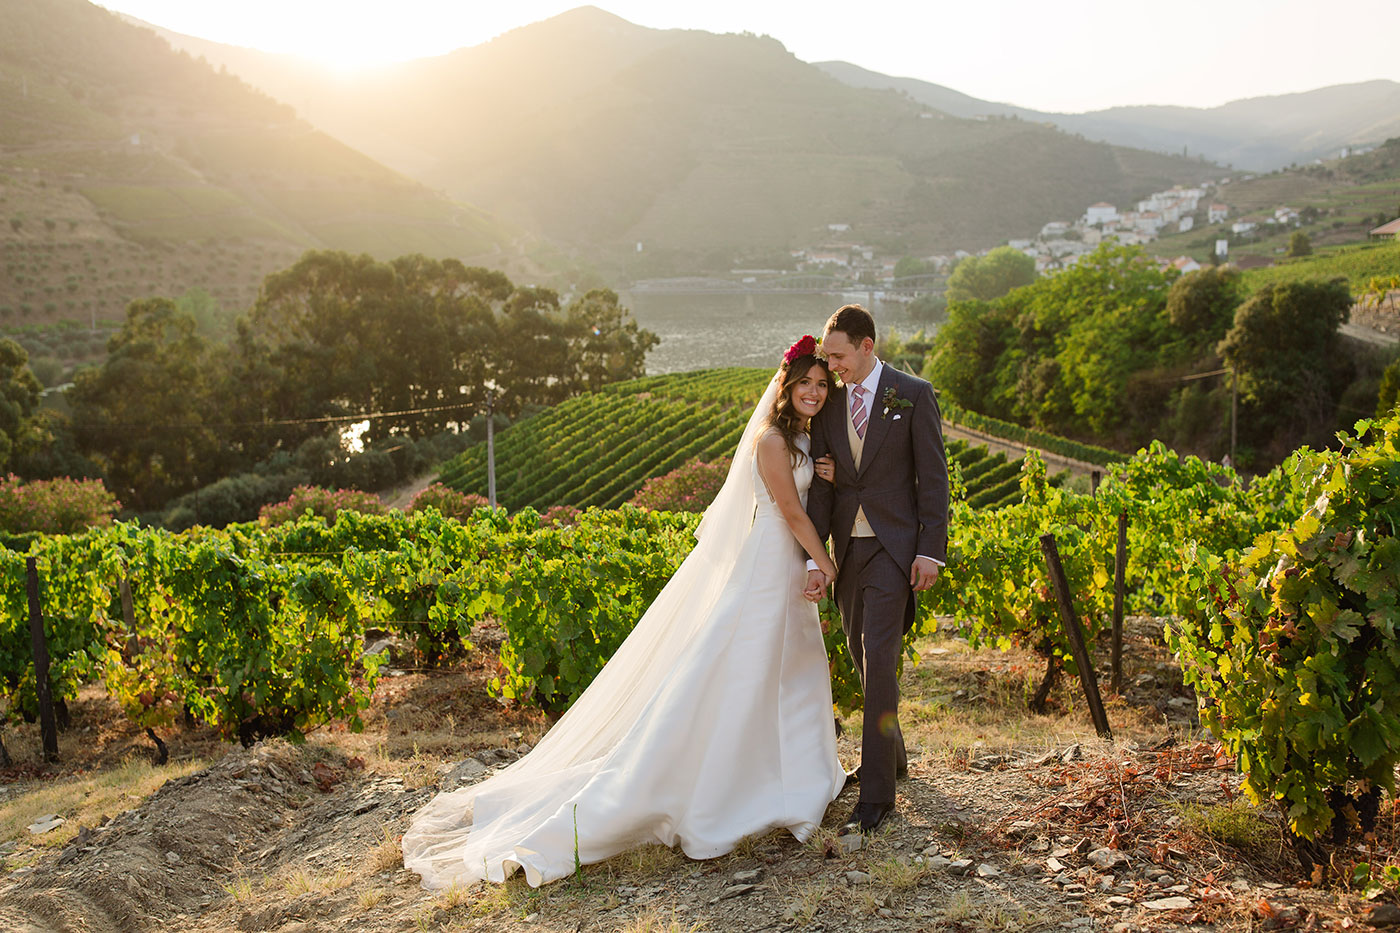 Carolina & Jeremy’s Family Wedding in Douro Valley